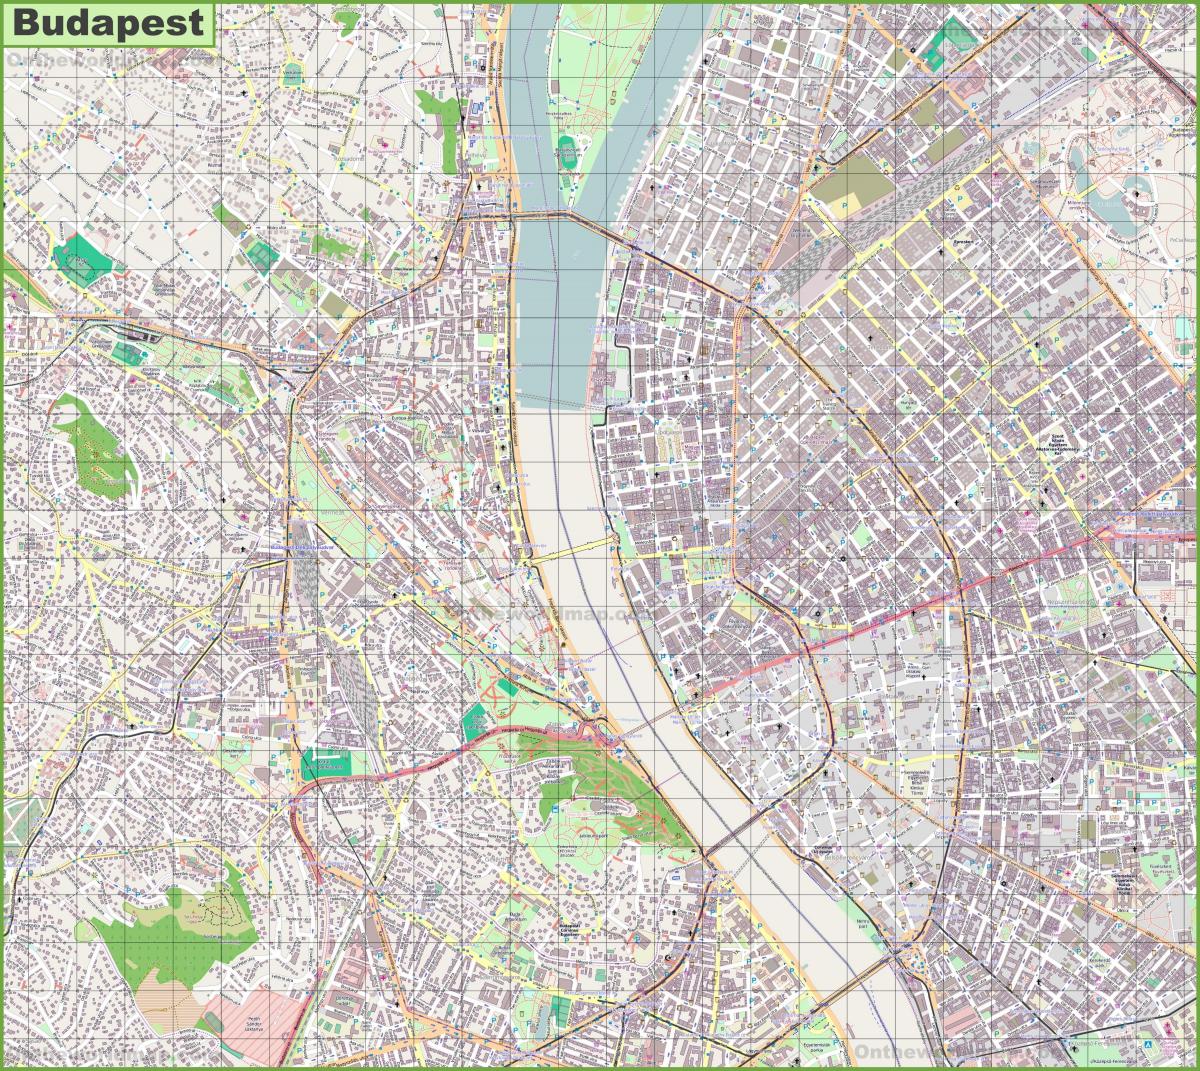 street kart over budapest, ungarn